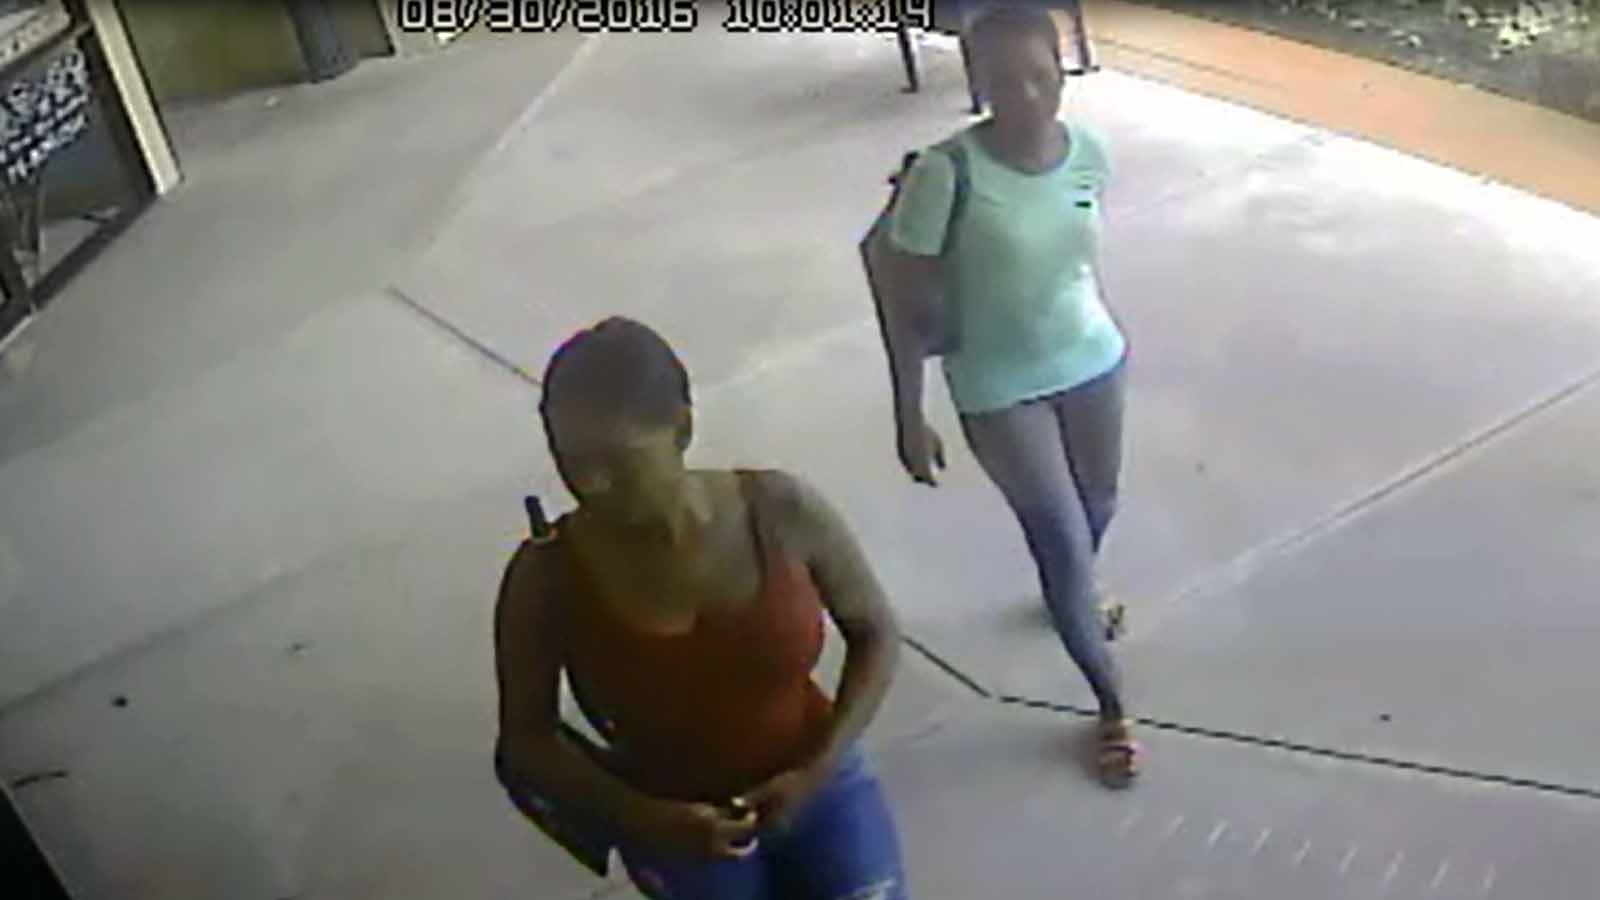 Help identify these women